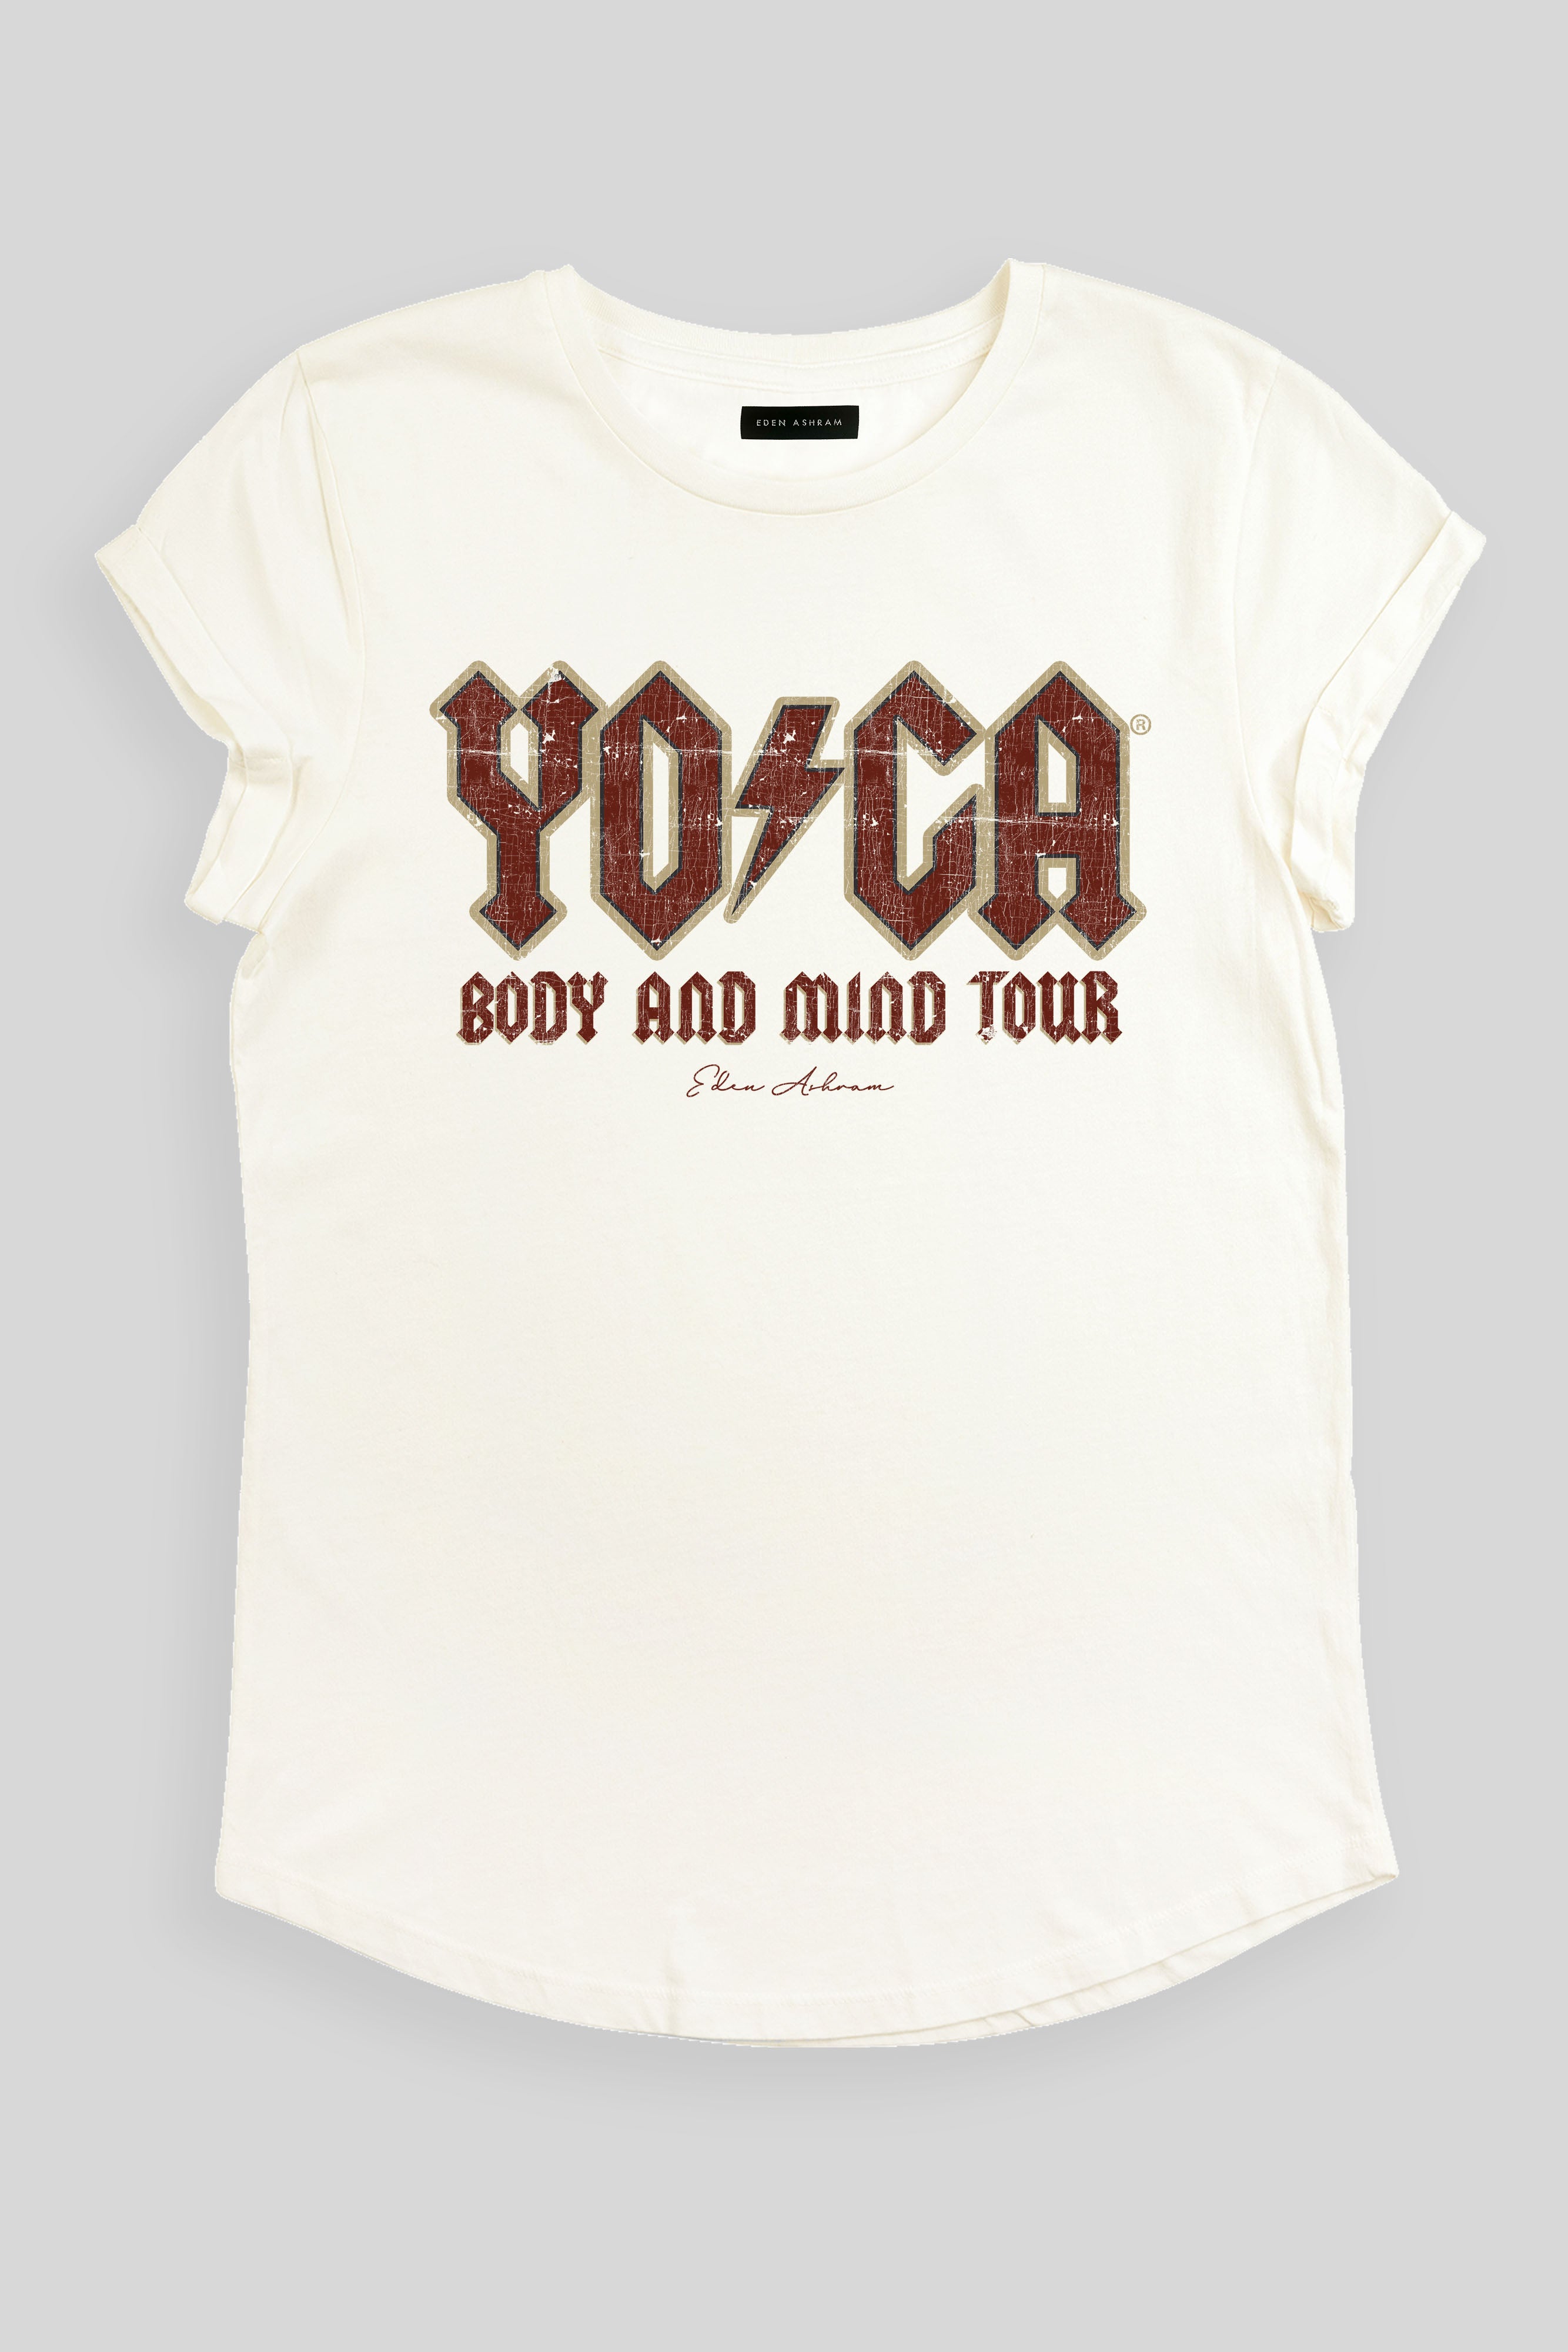 EDEN ASHRAM The Original YOGA Tour Premium Rolled Sleeve T-Shirt Stonewash White